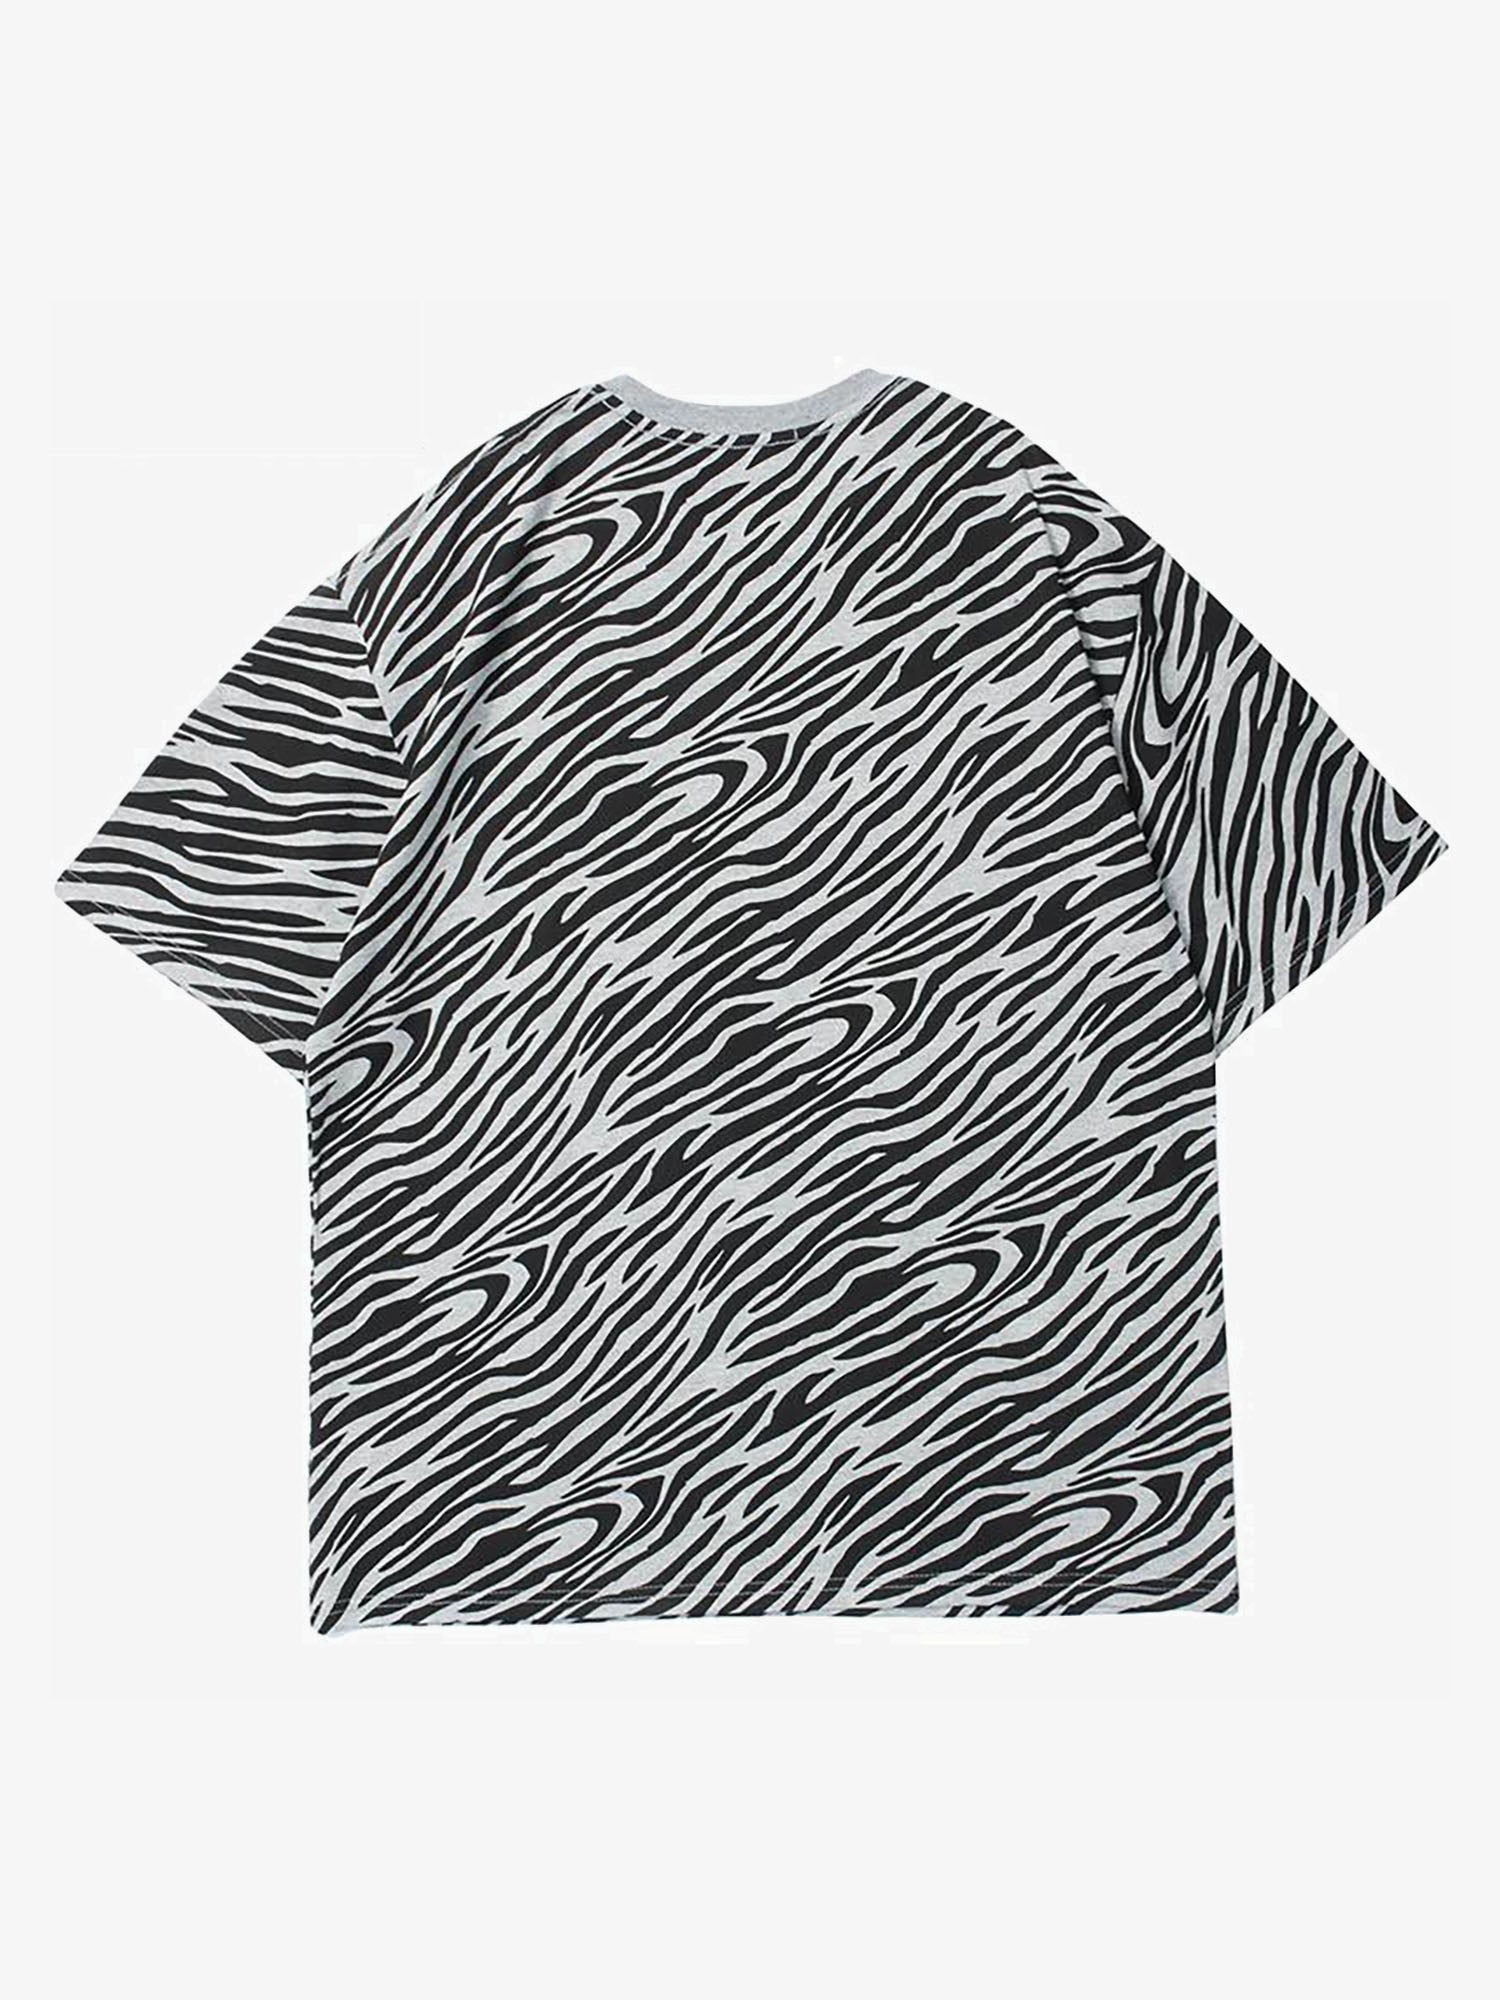 JUSTNOTAG Zebra Striped bear Hugging Bear Print Short Sleeve Tee